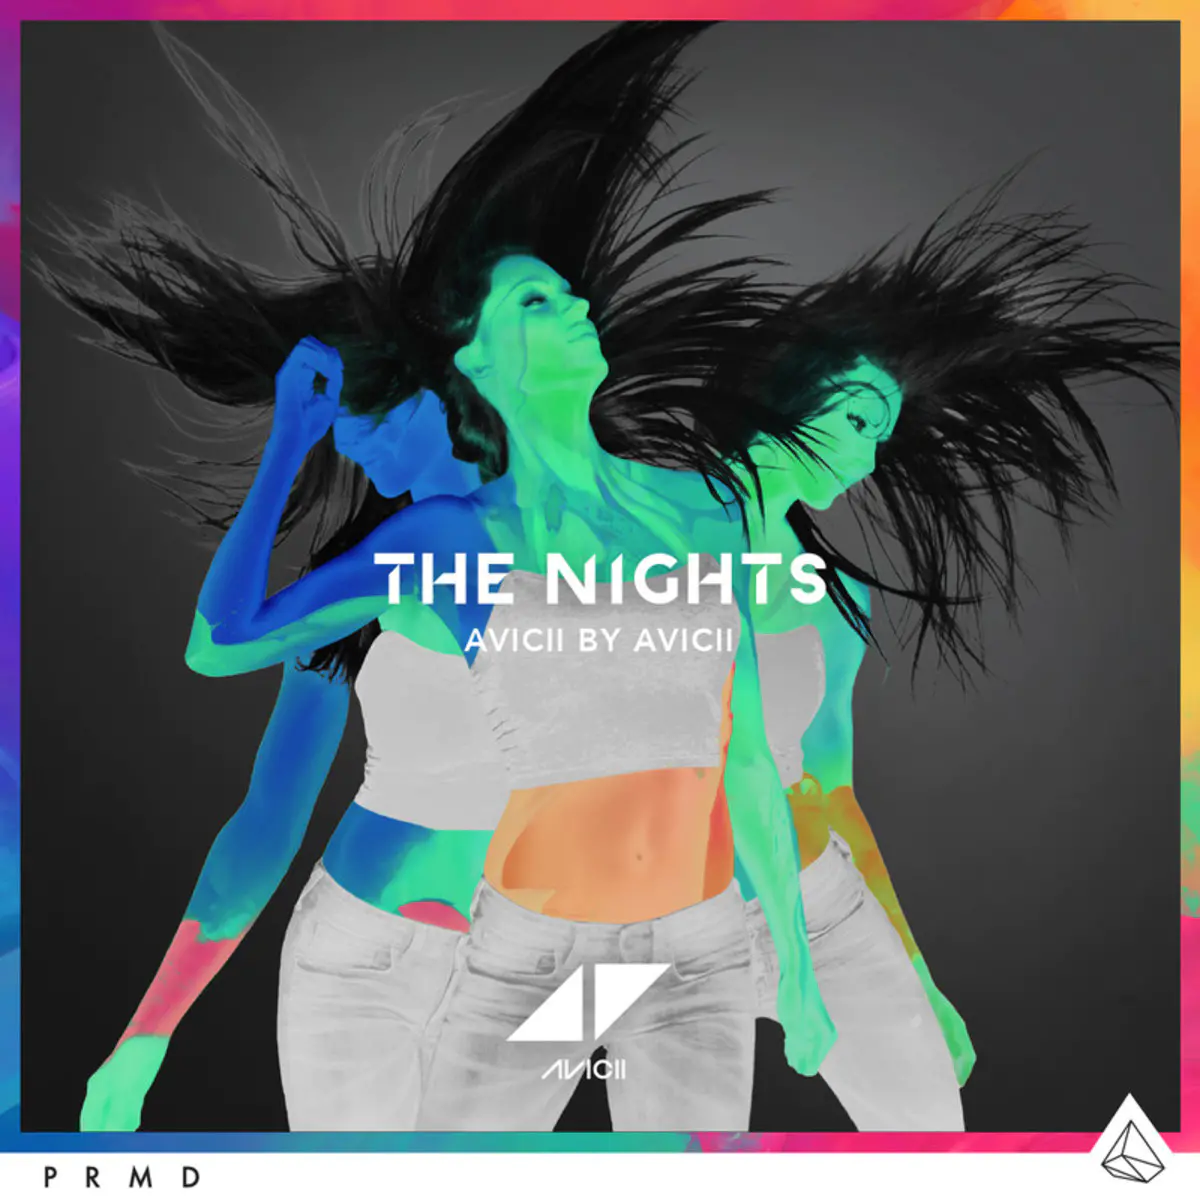 The Nights Lyrics in English, The Nights (Avicii By Avicii) The Nights Song  Lyrics in English Free Online on Gaana.com